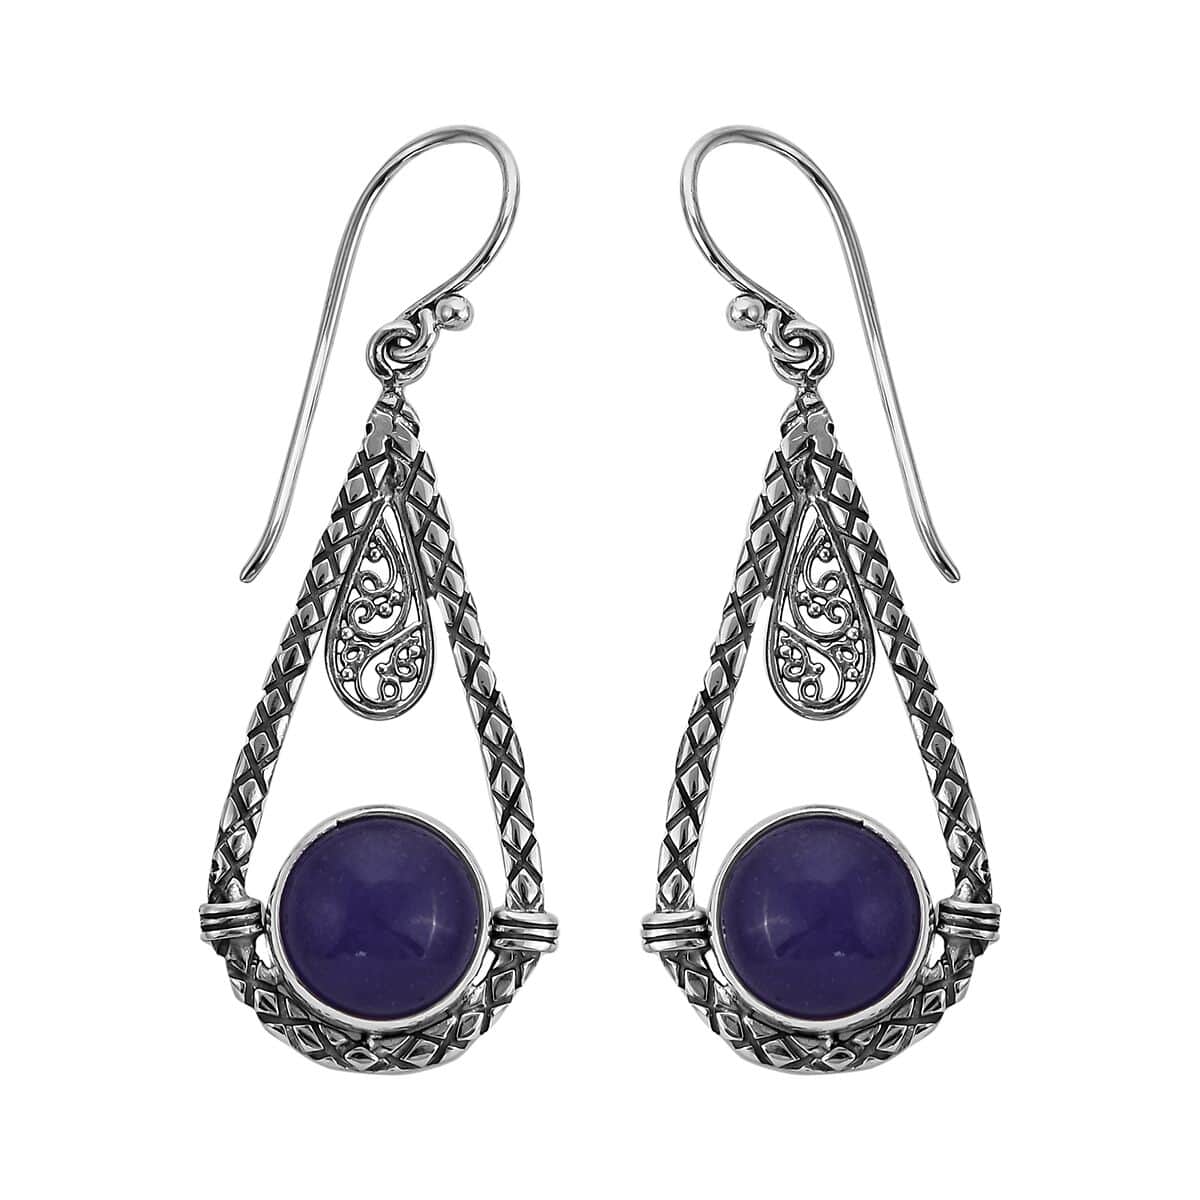 Buy Bali Legacy Purple Jade (D) Earrings in Sterling Silver 4.50